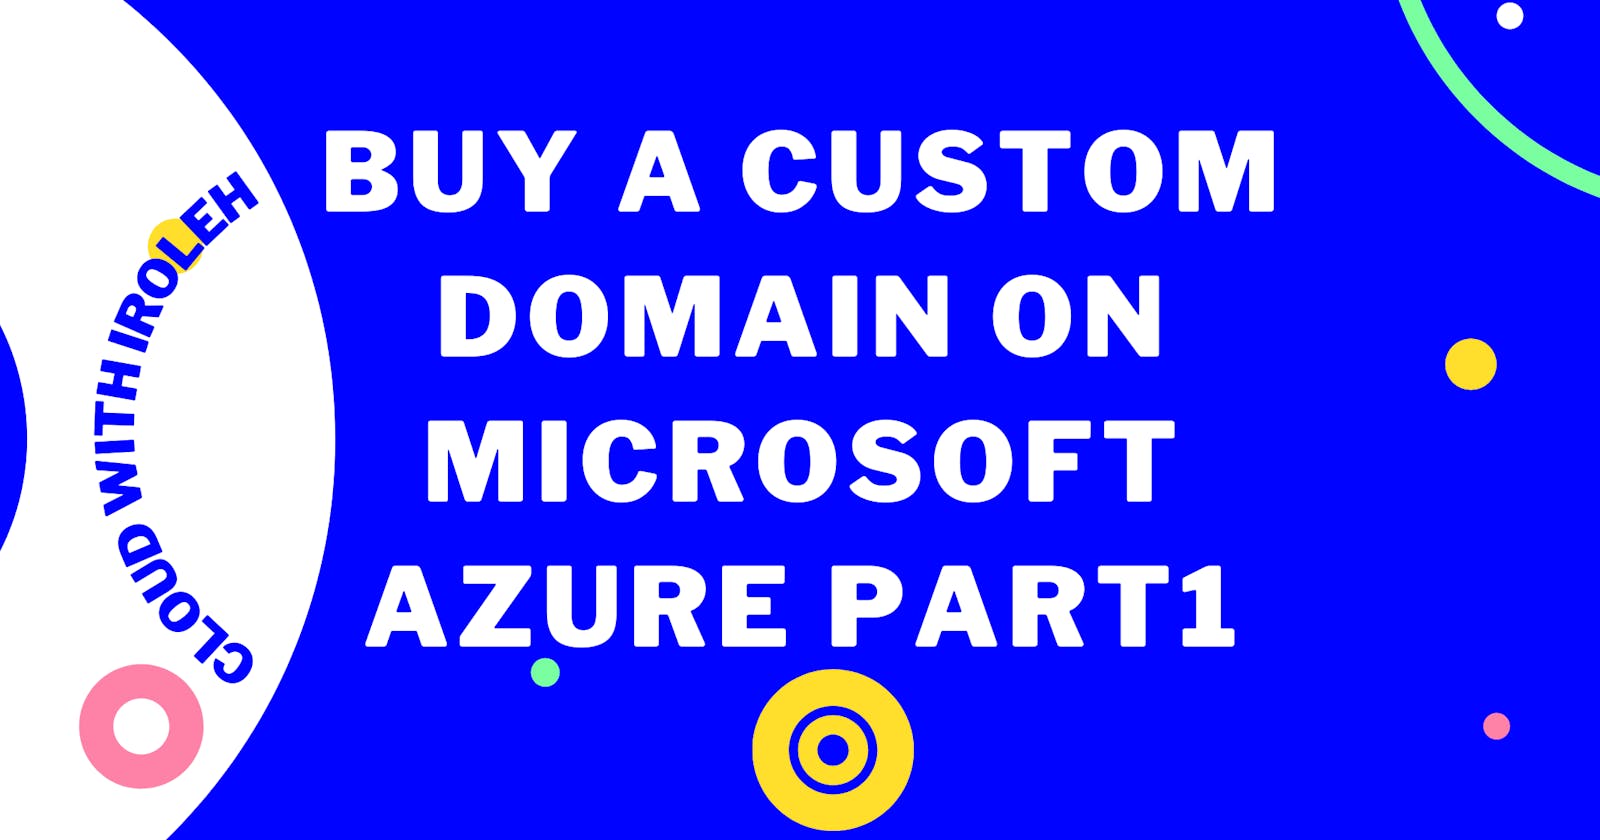 Buy a custom domain on Microsoft Azure part1